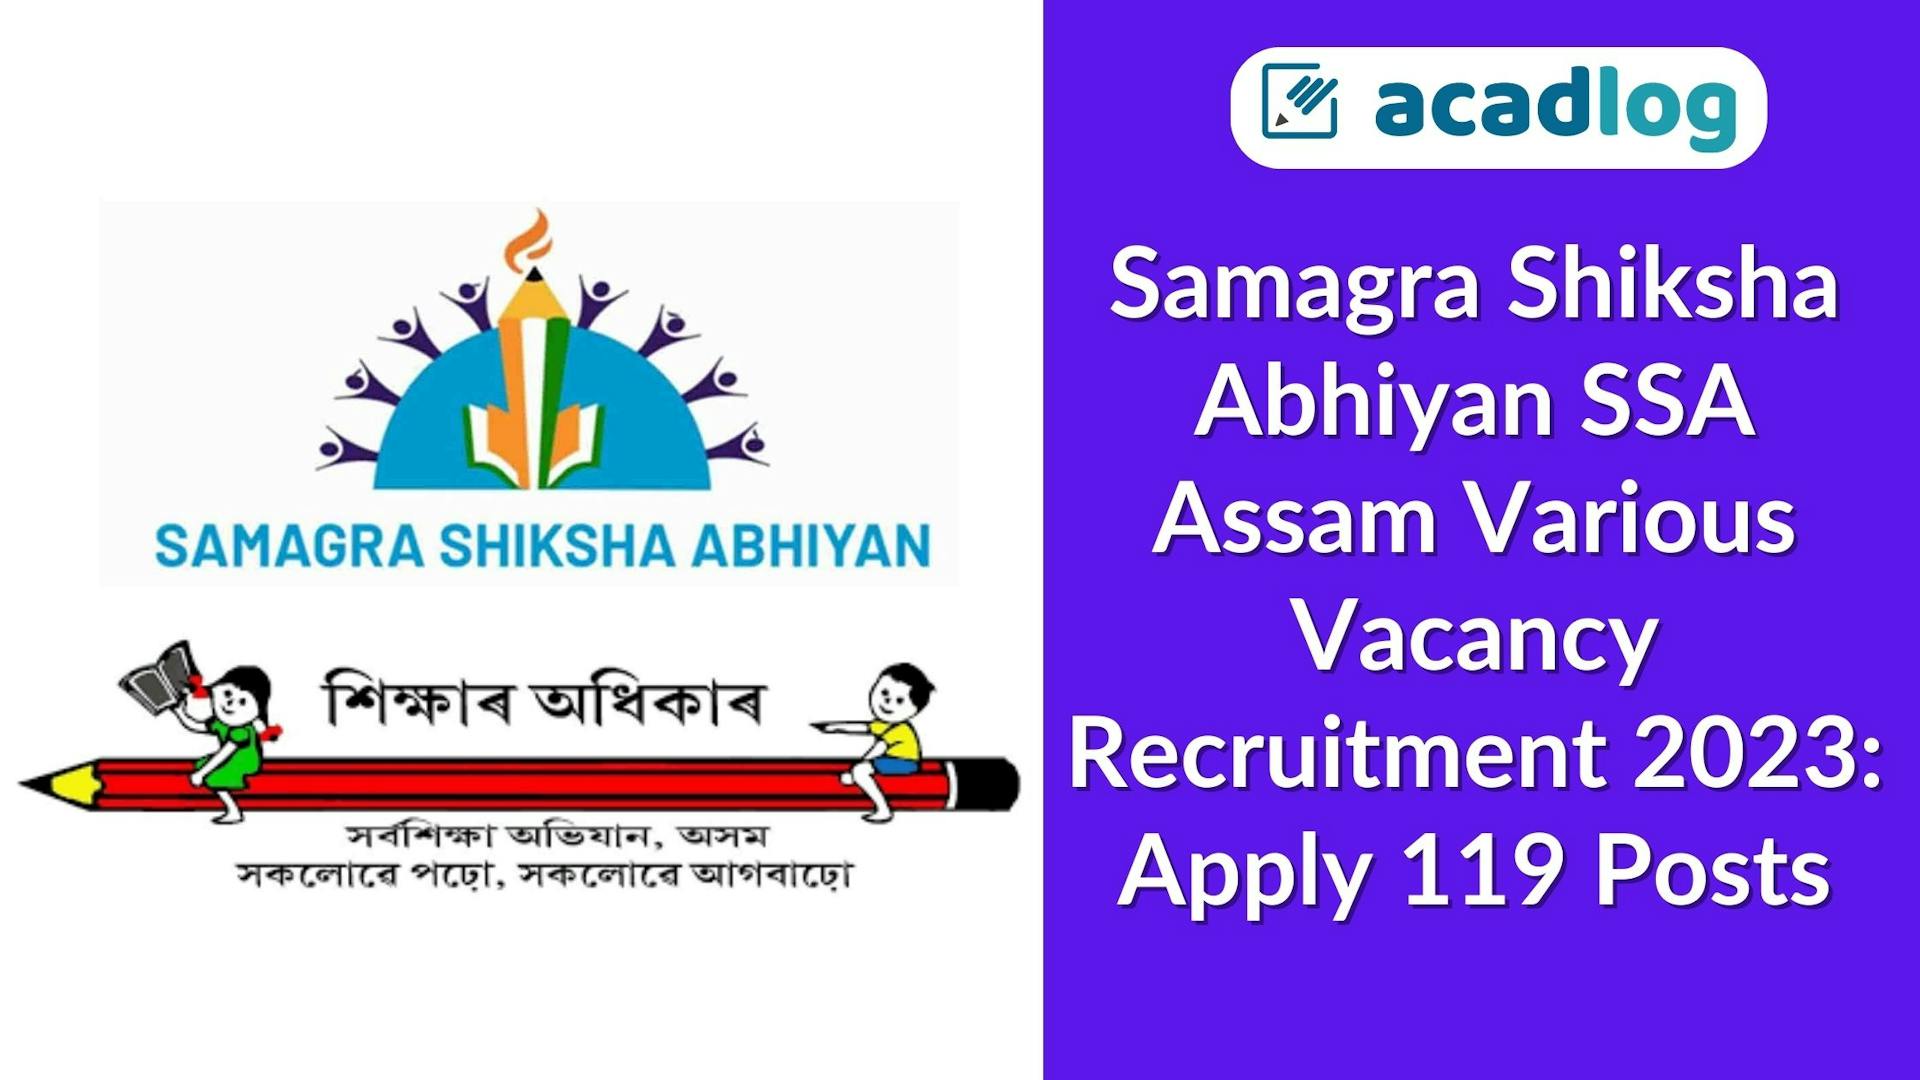 Samagra Shiksha Abhiyan SSA Assam Various Vacancy Recruitment 2023: Apply 119 Posts